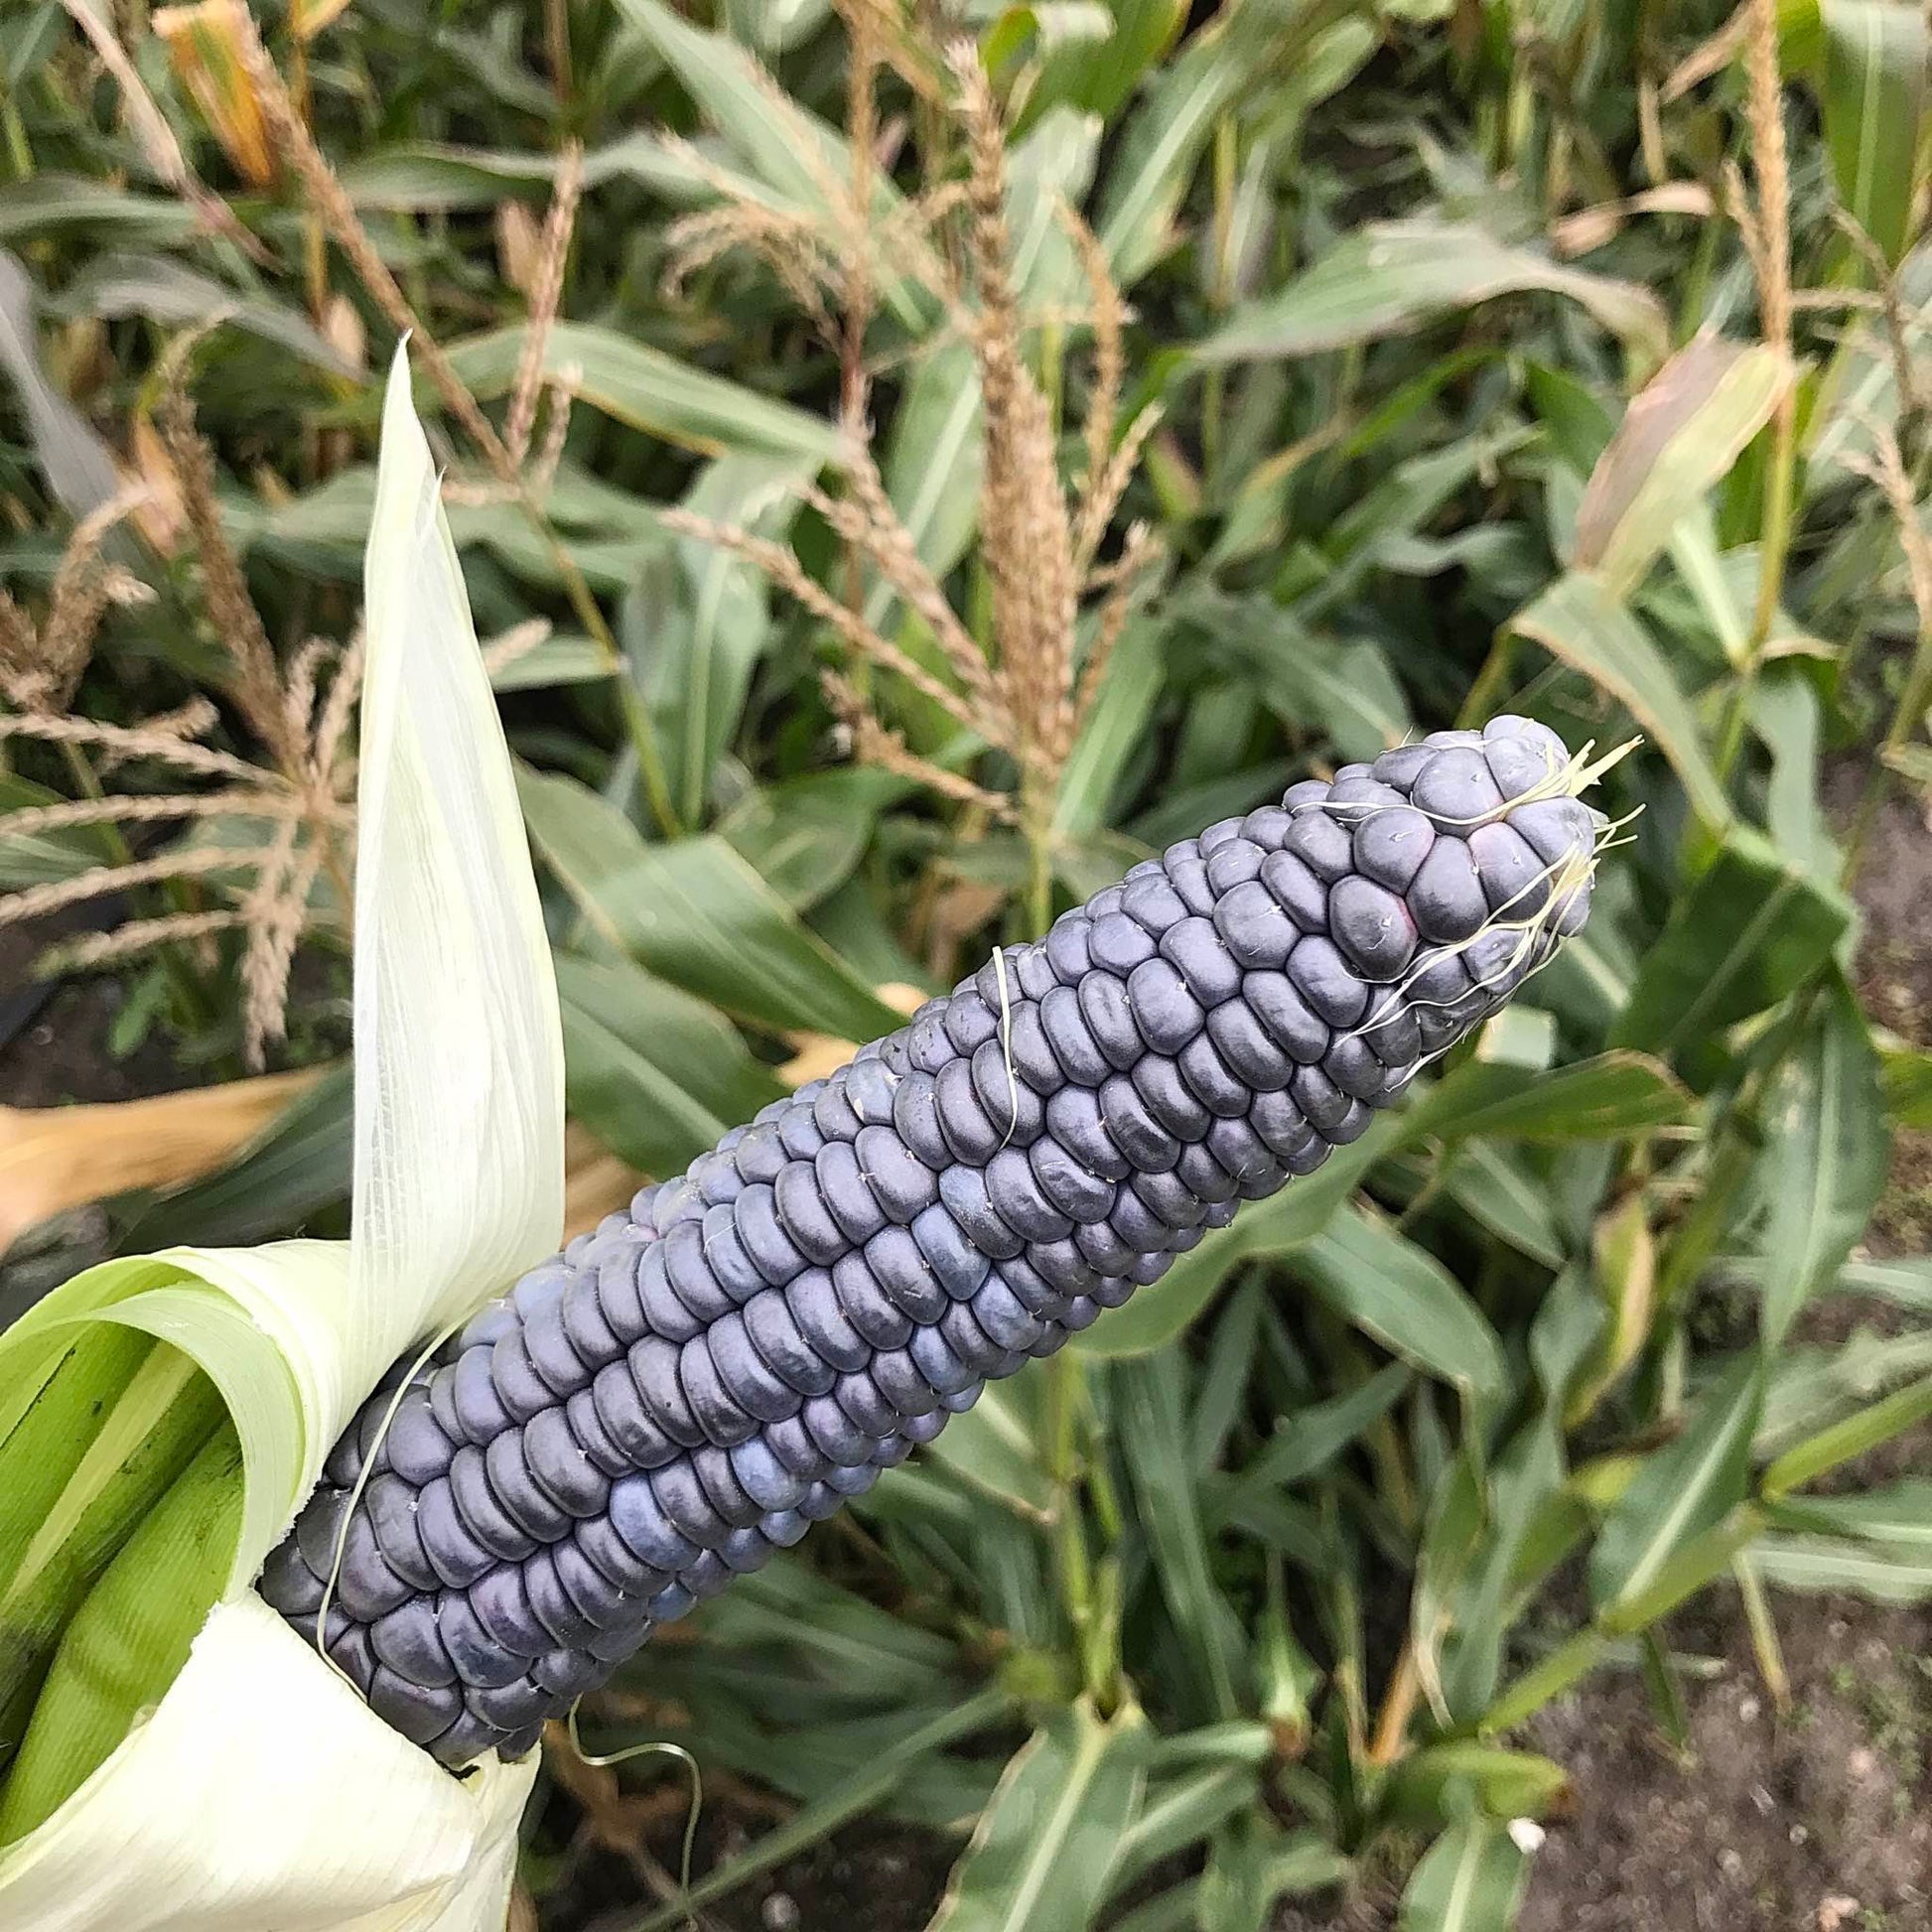 Cob of corn with steel-blue kernels.